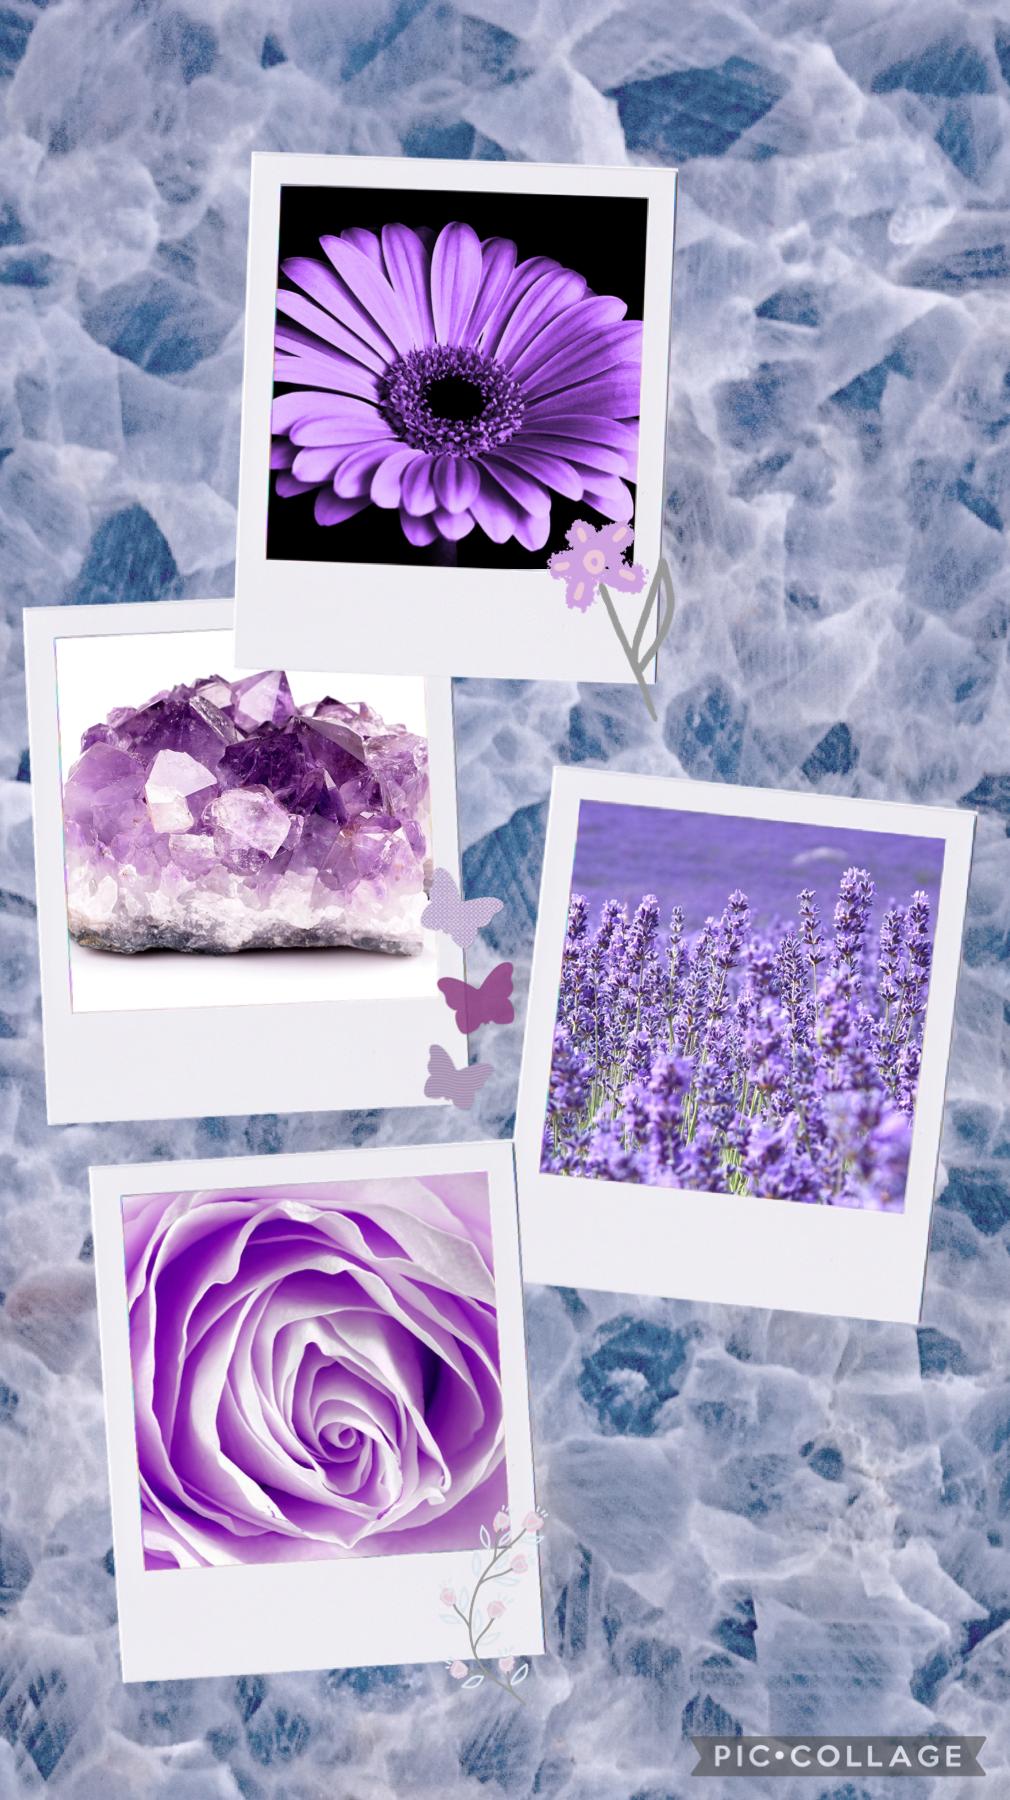 Purple, fucia, dark purple there all purples. What’s ur favorite shade of purple?